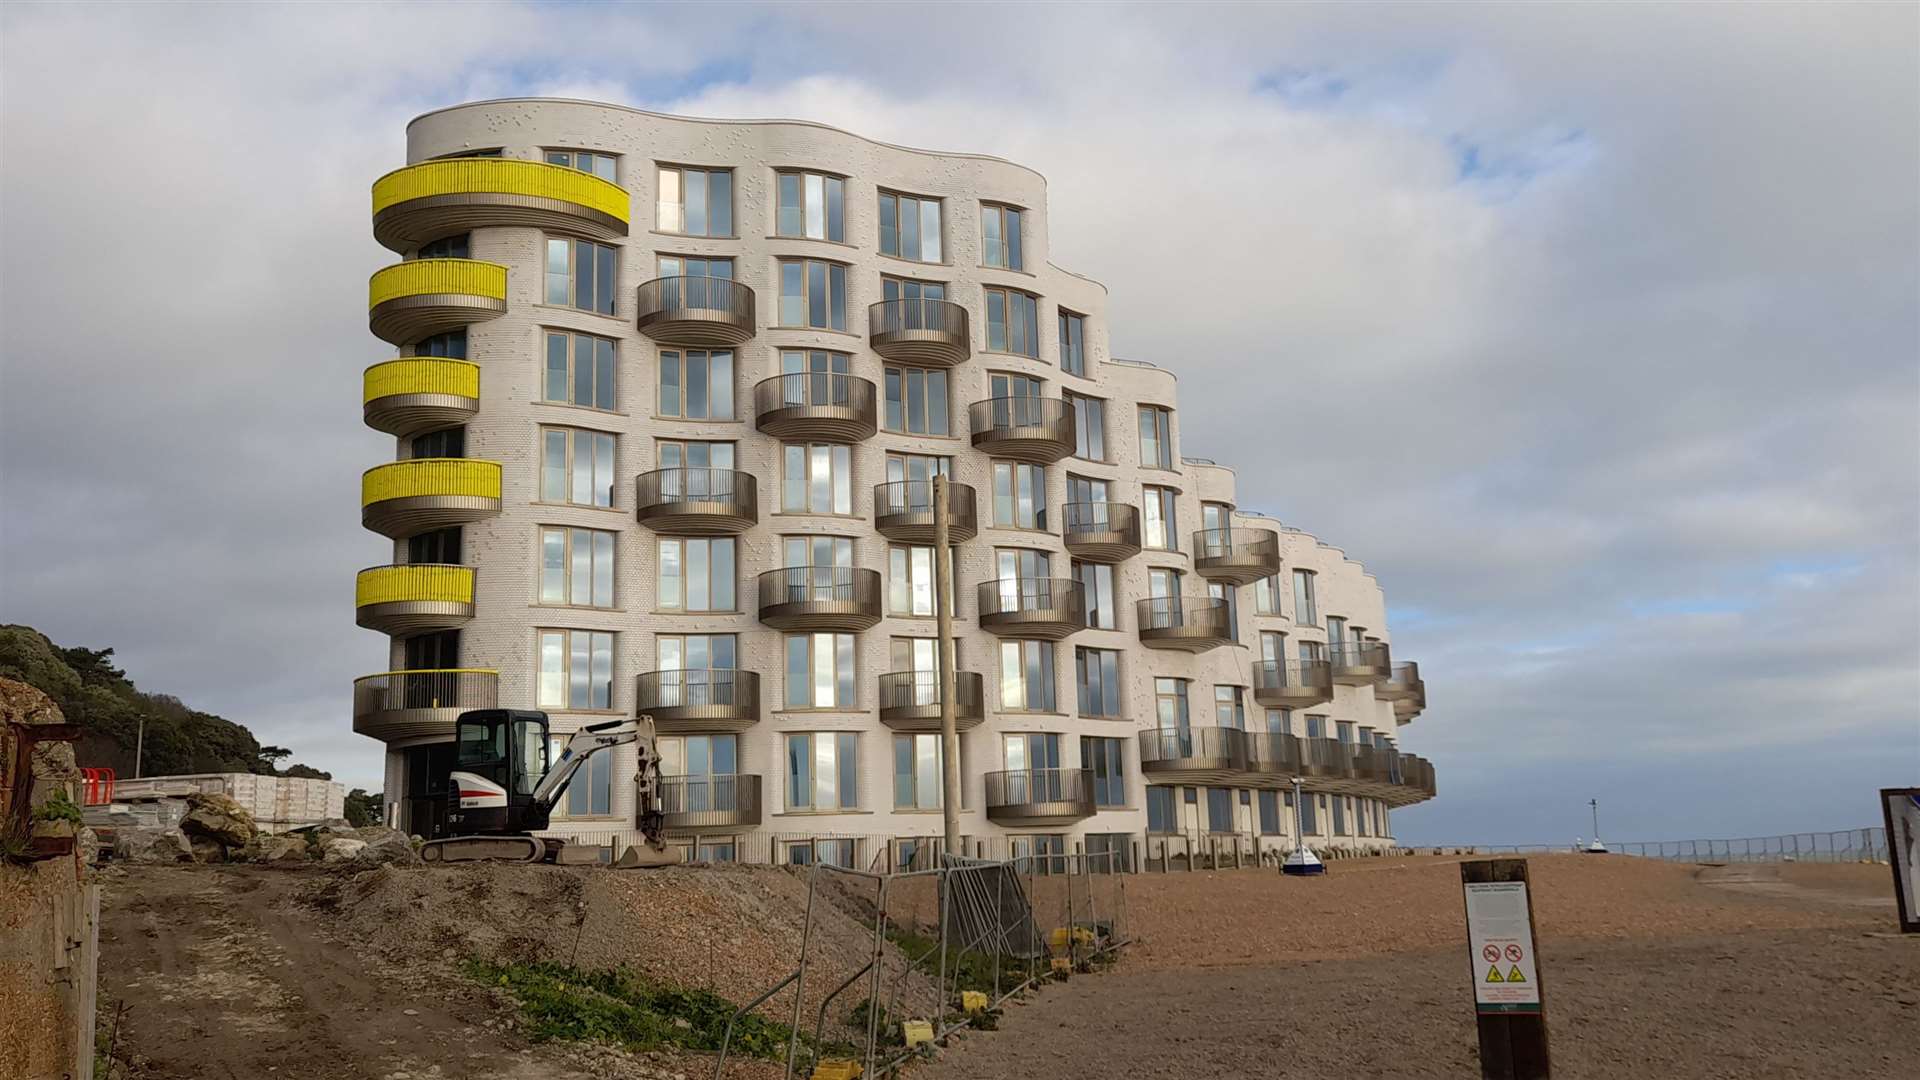 Flats at the Shoreline Crescent development start from £430,000